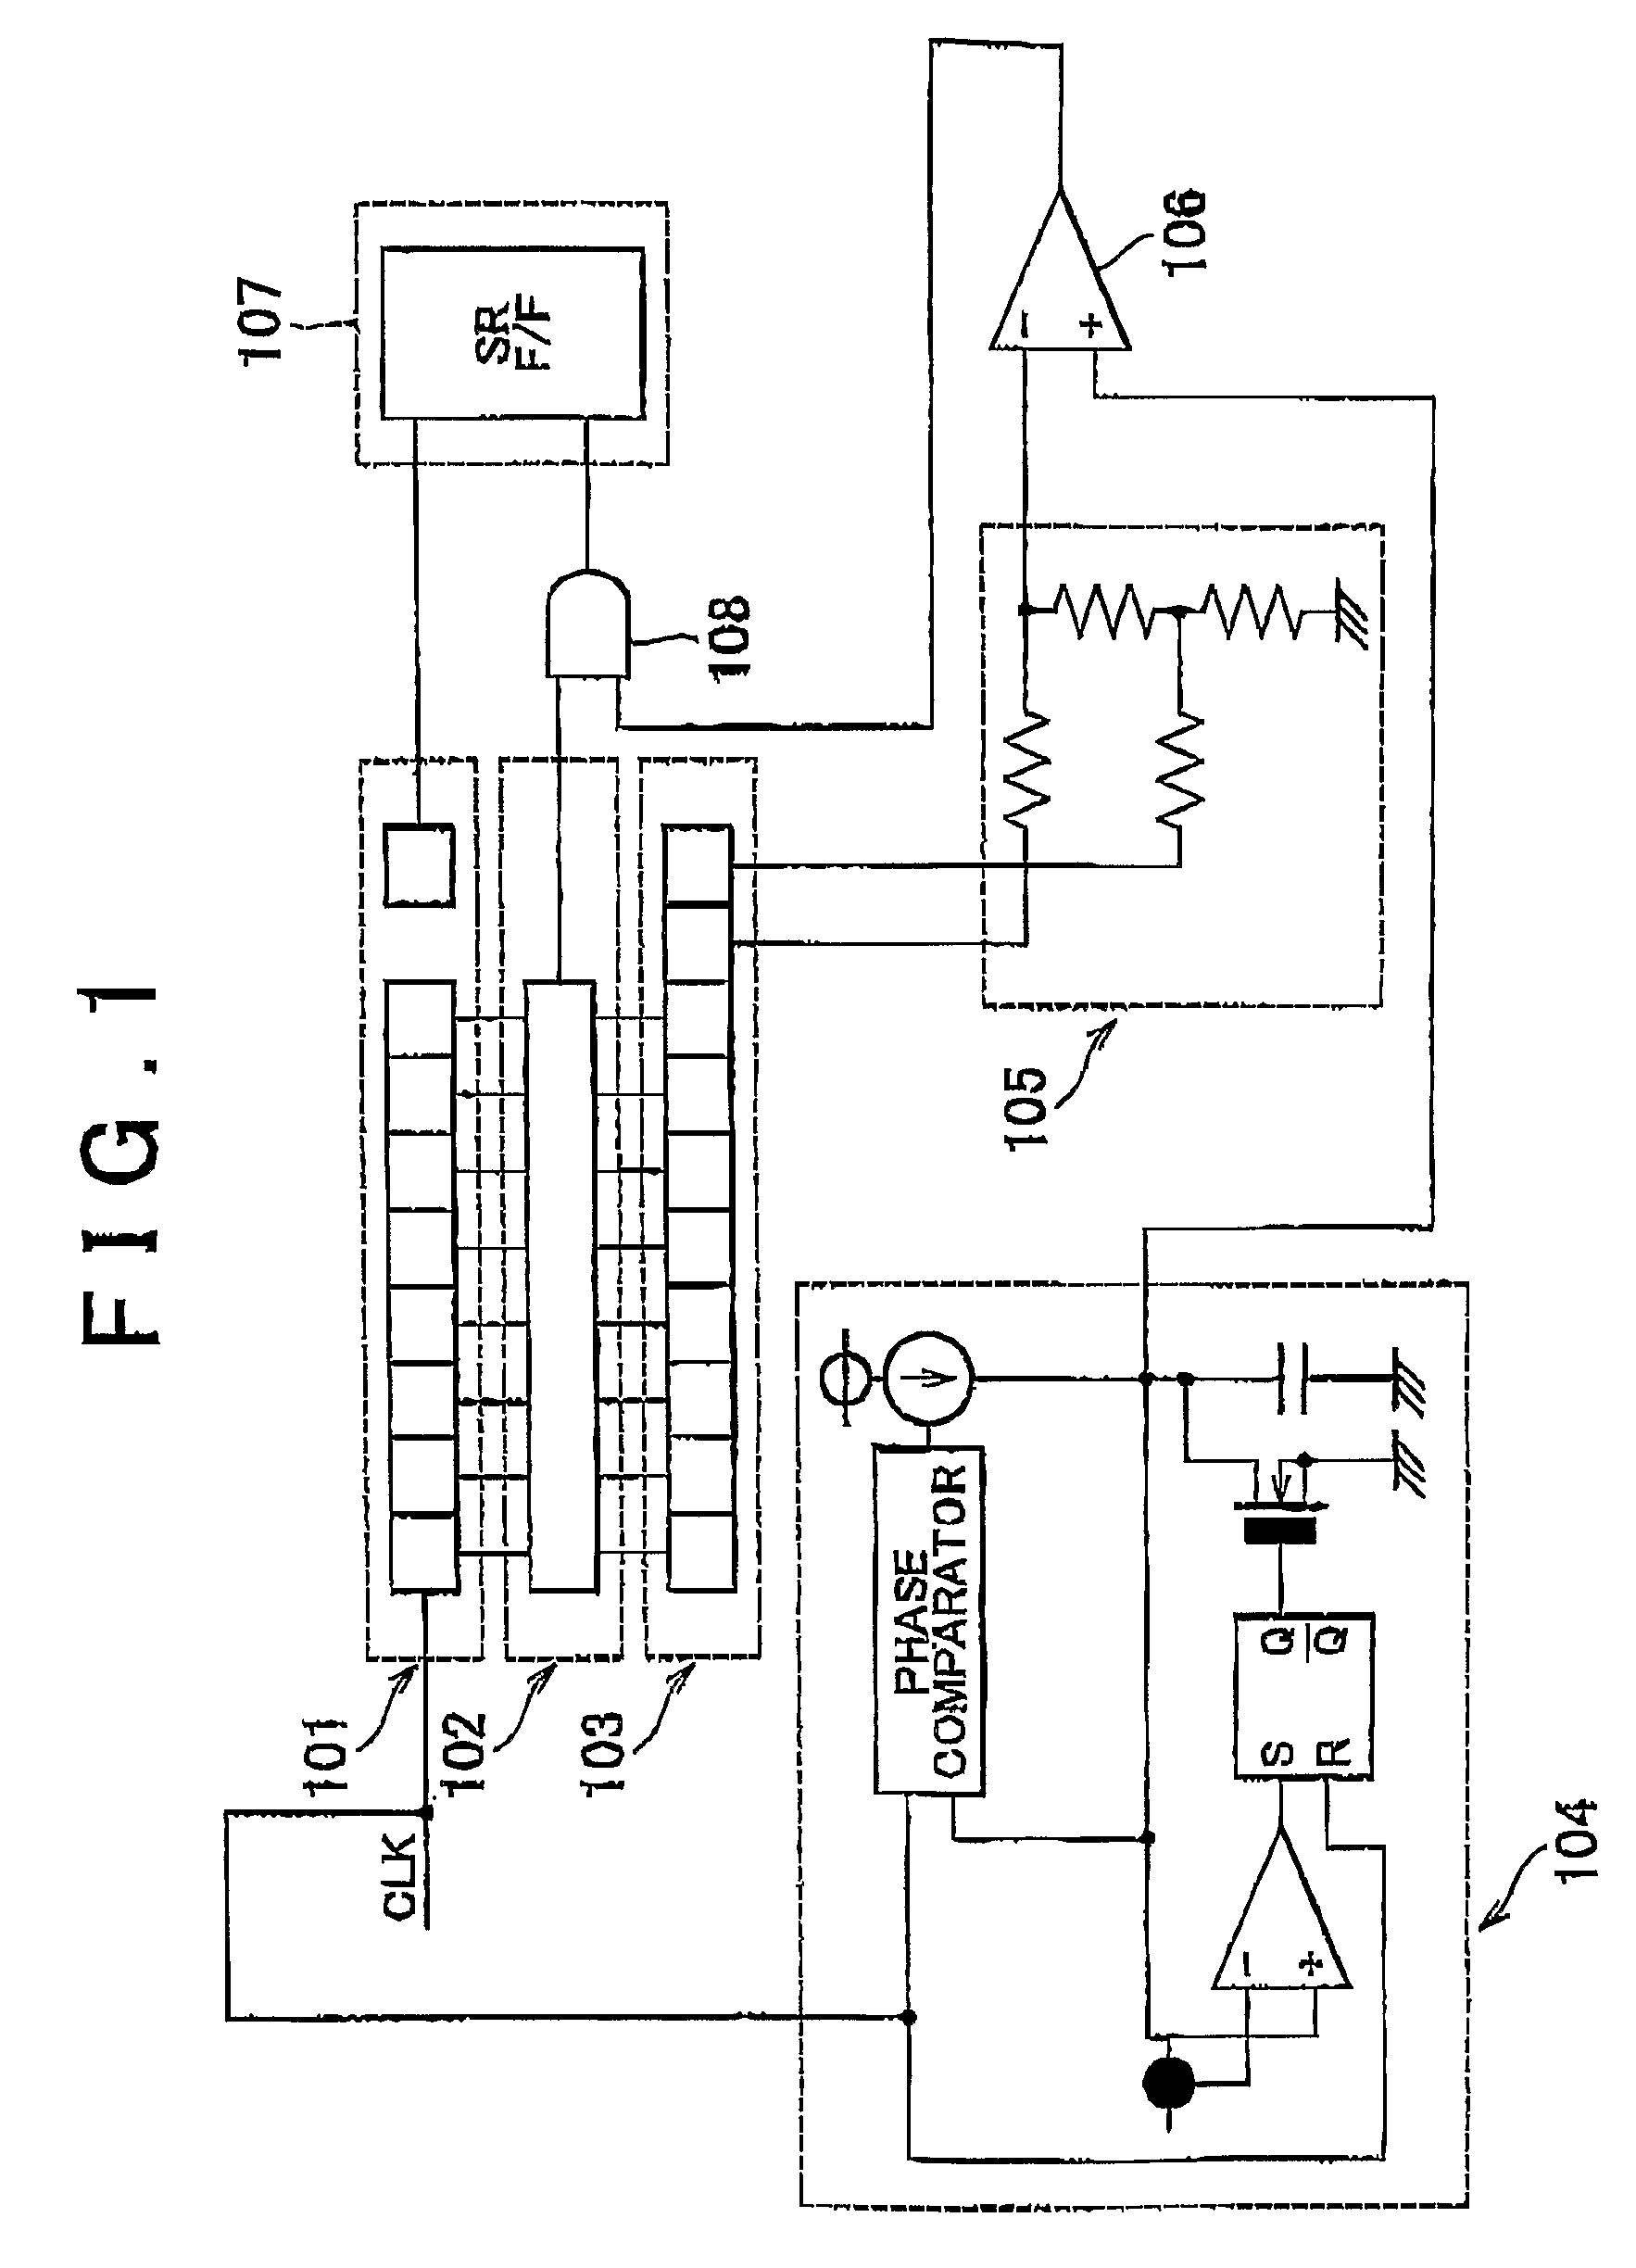 PWM signal generating circuit